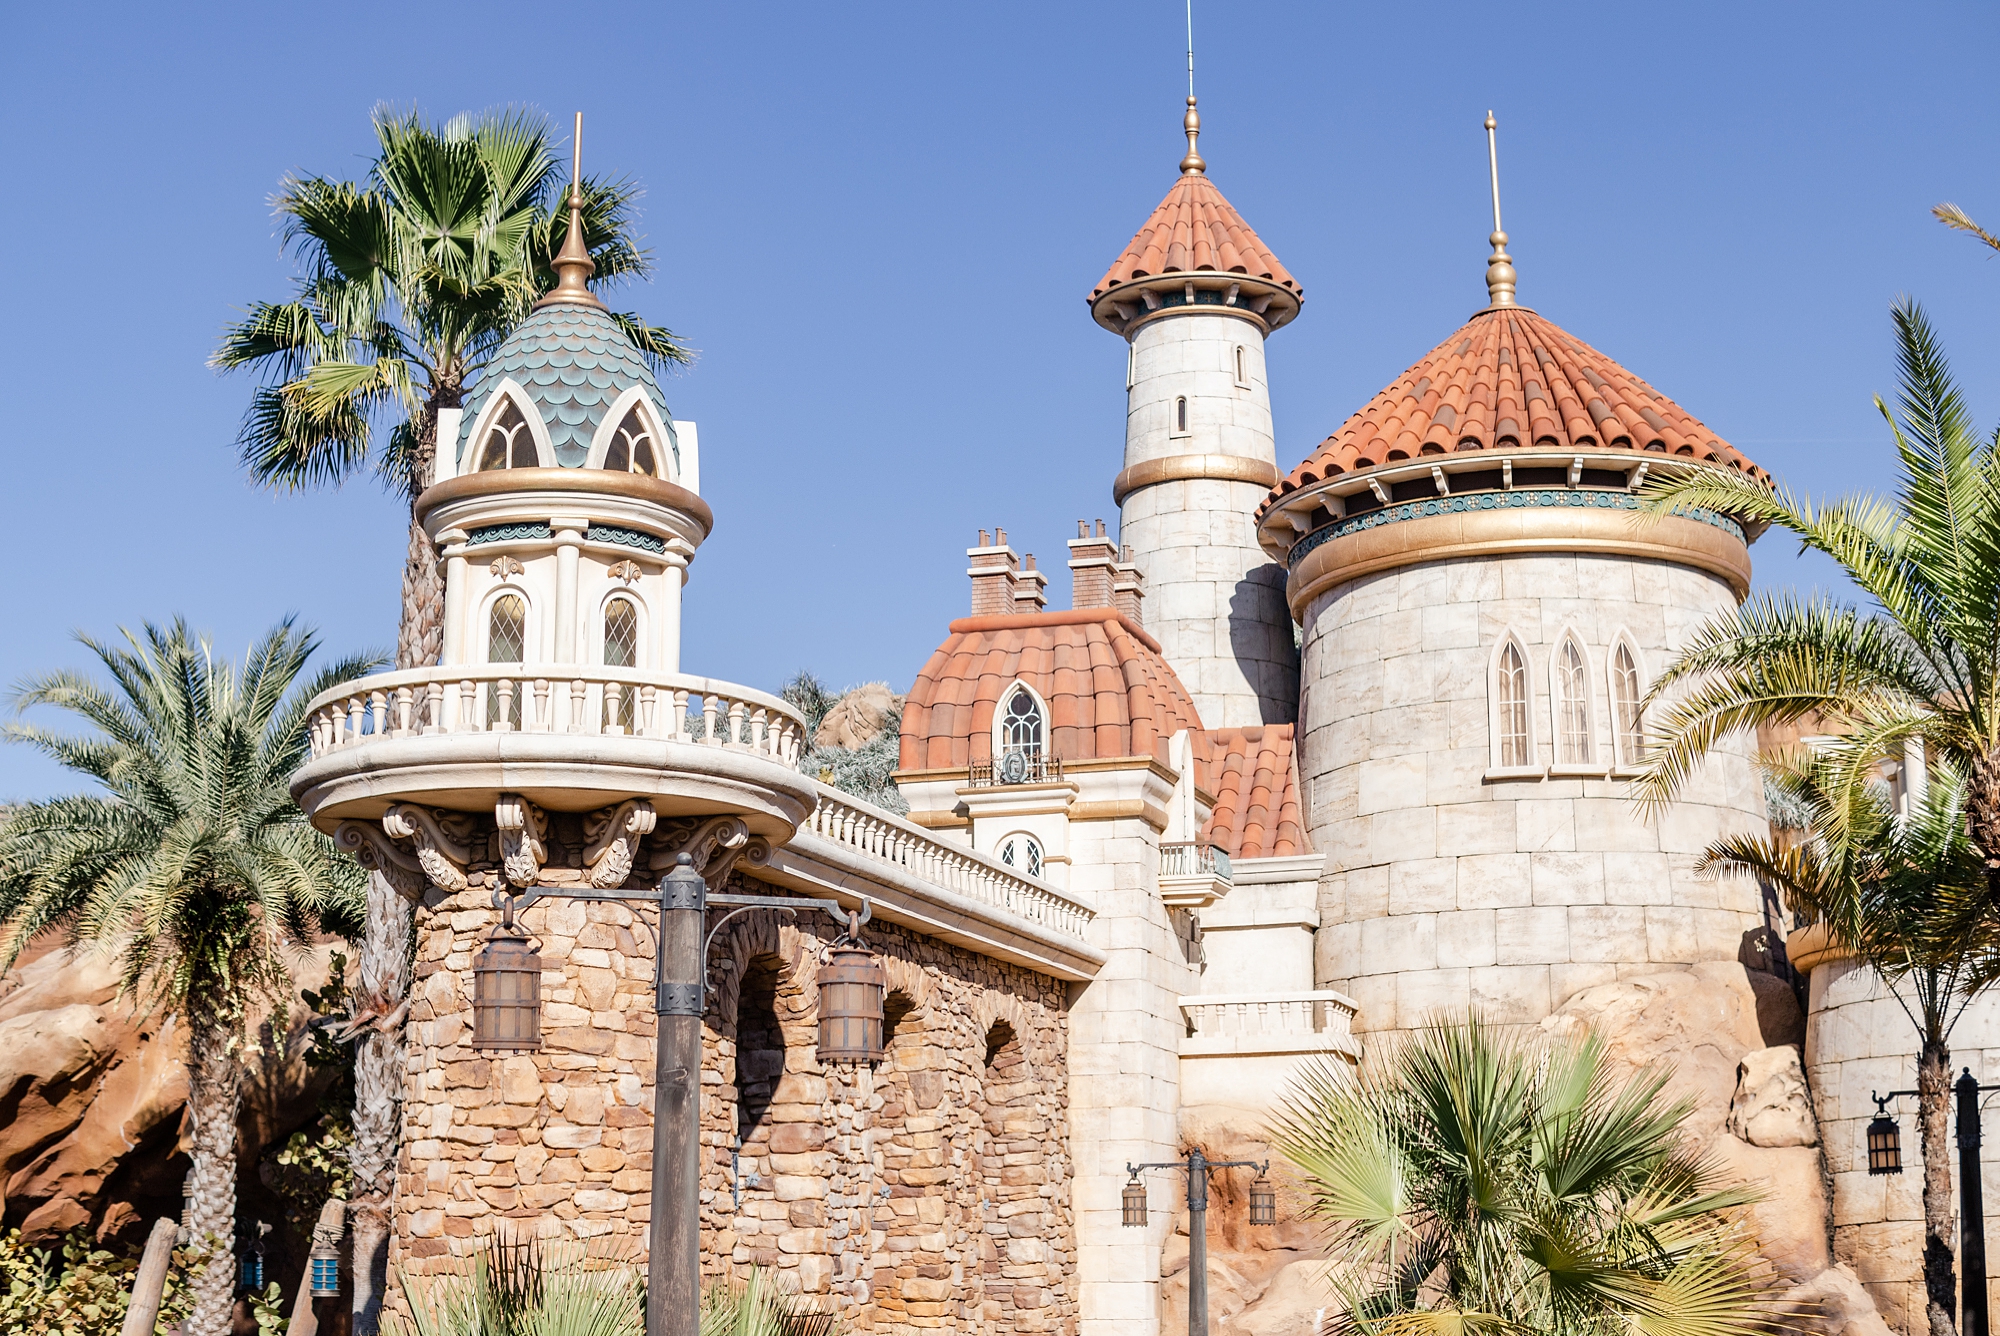 Ariel's castle at Magic Kingdom in Walt Disney World